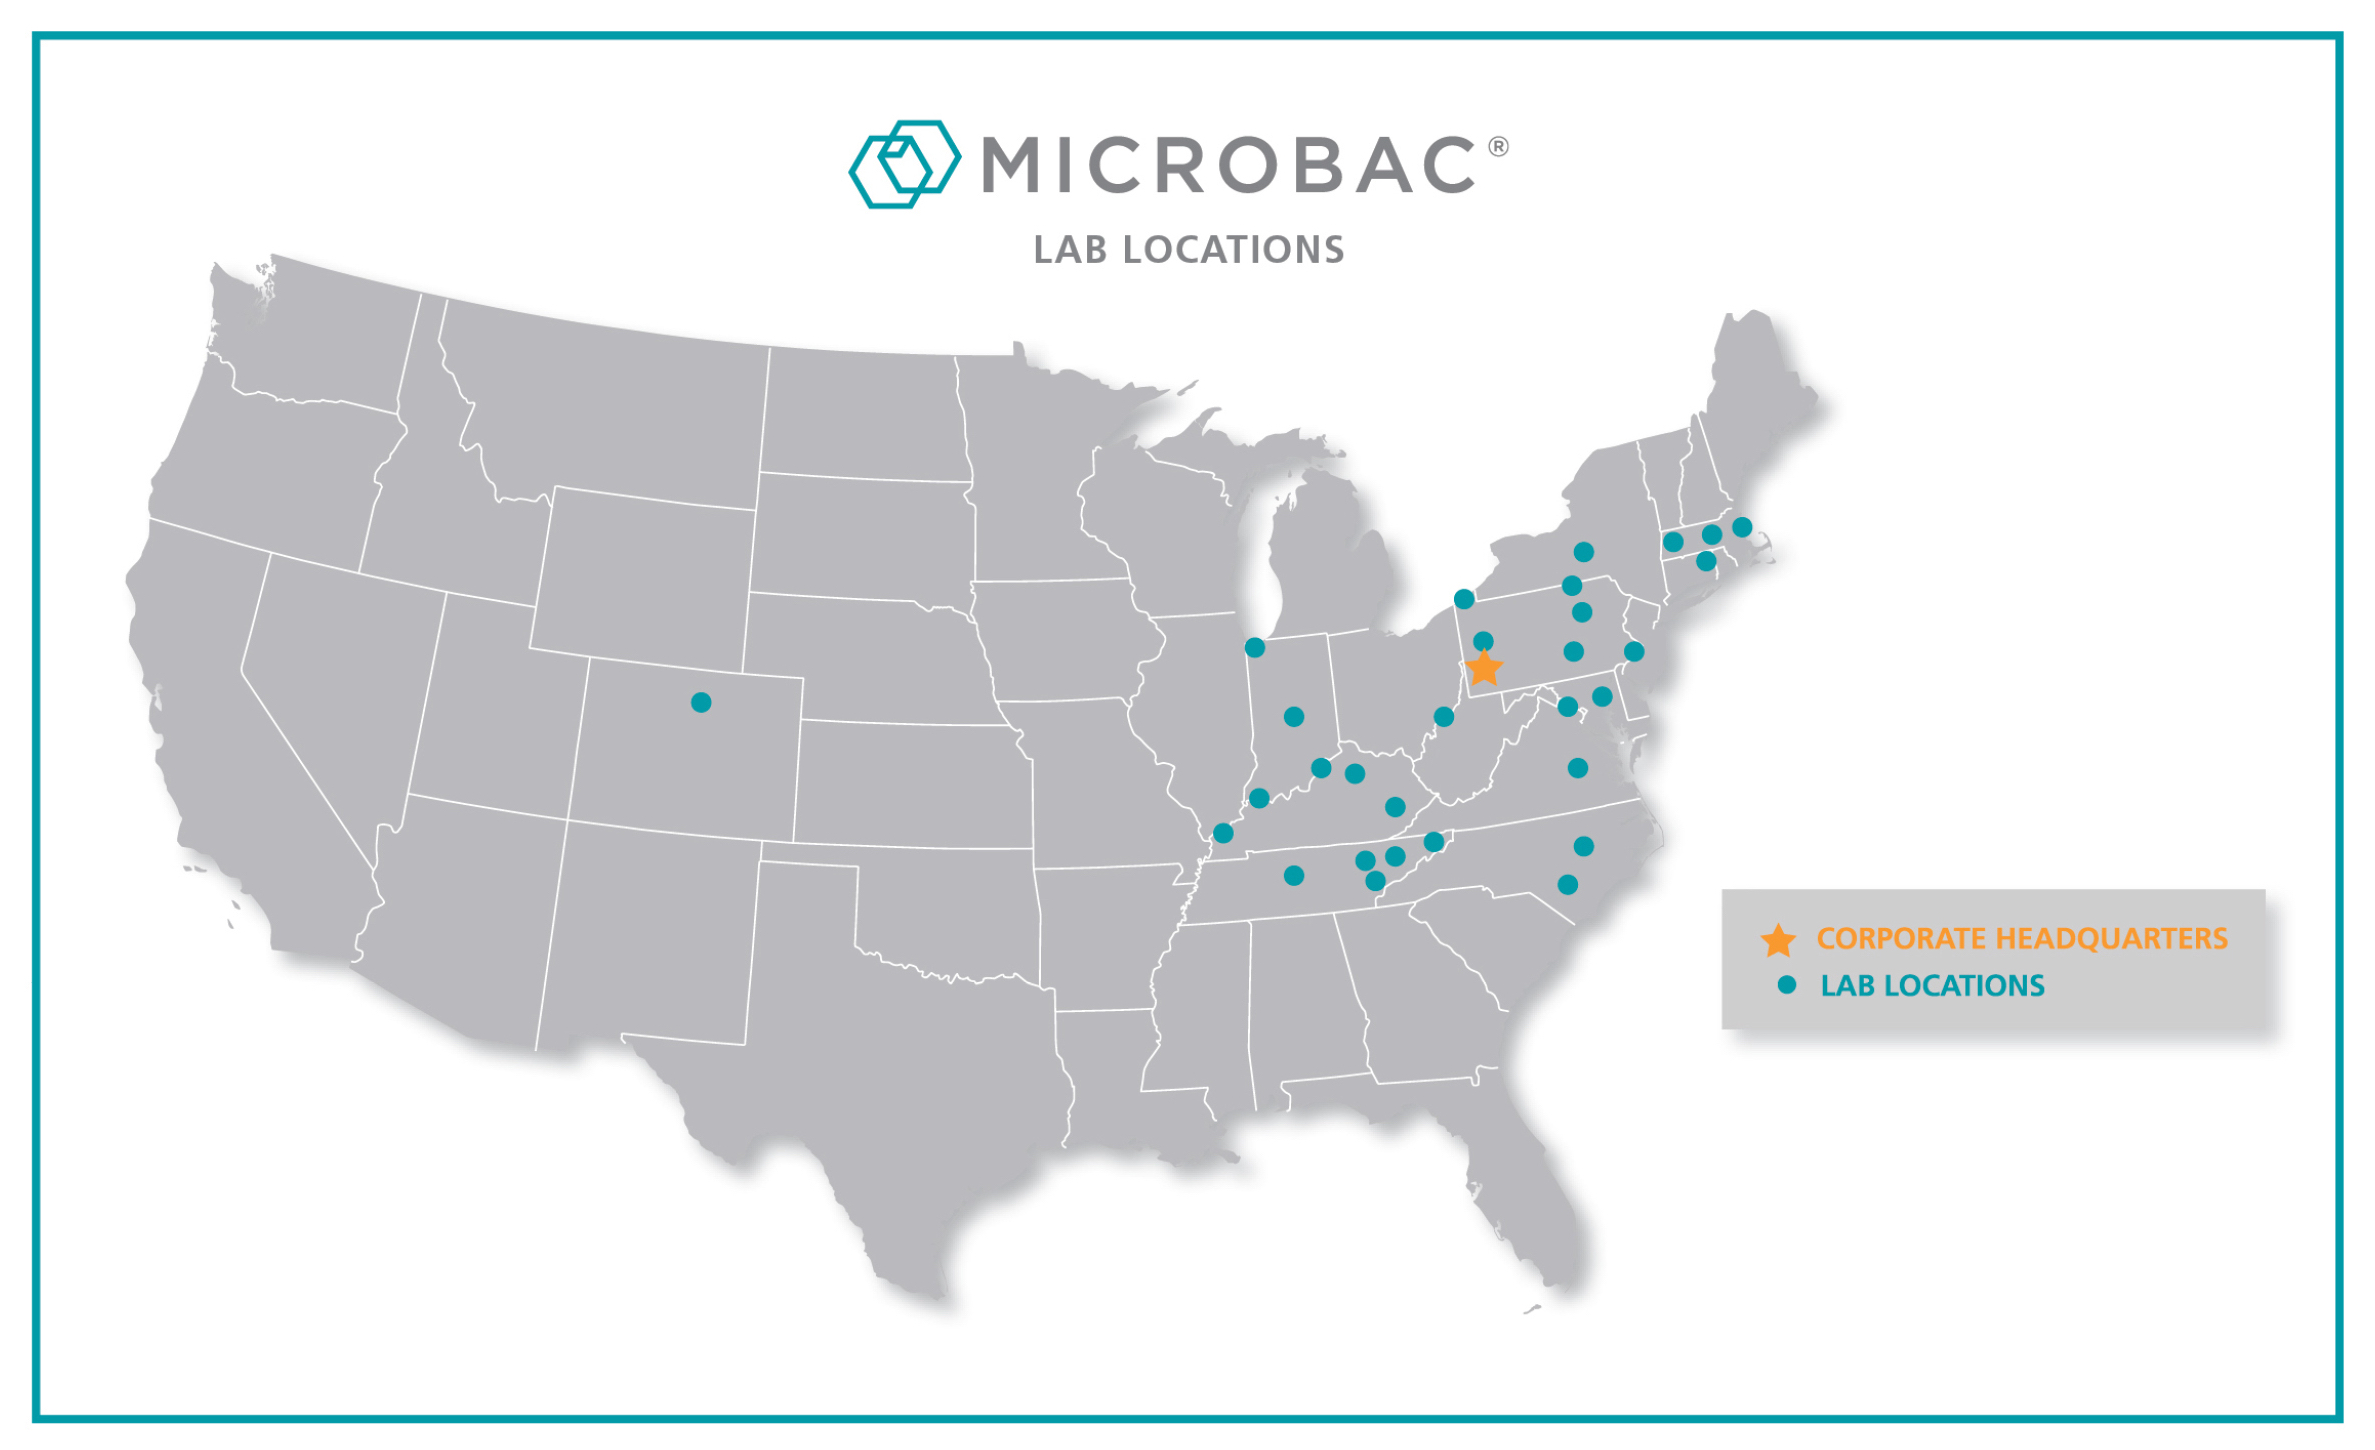 MICROBAC LOCATIONS